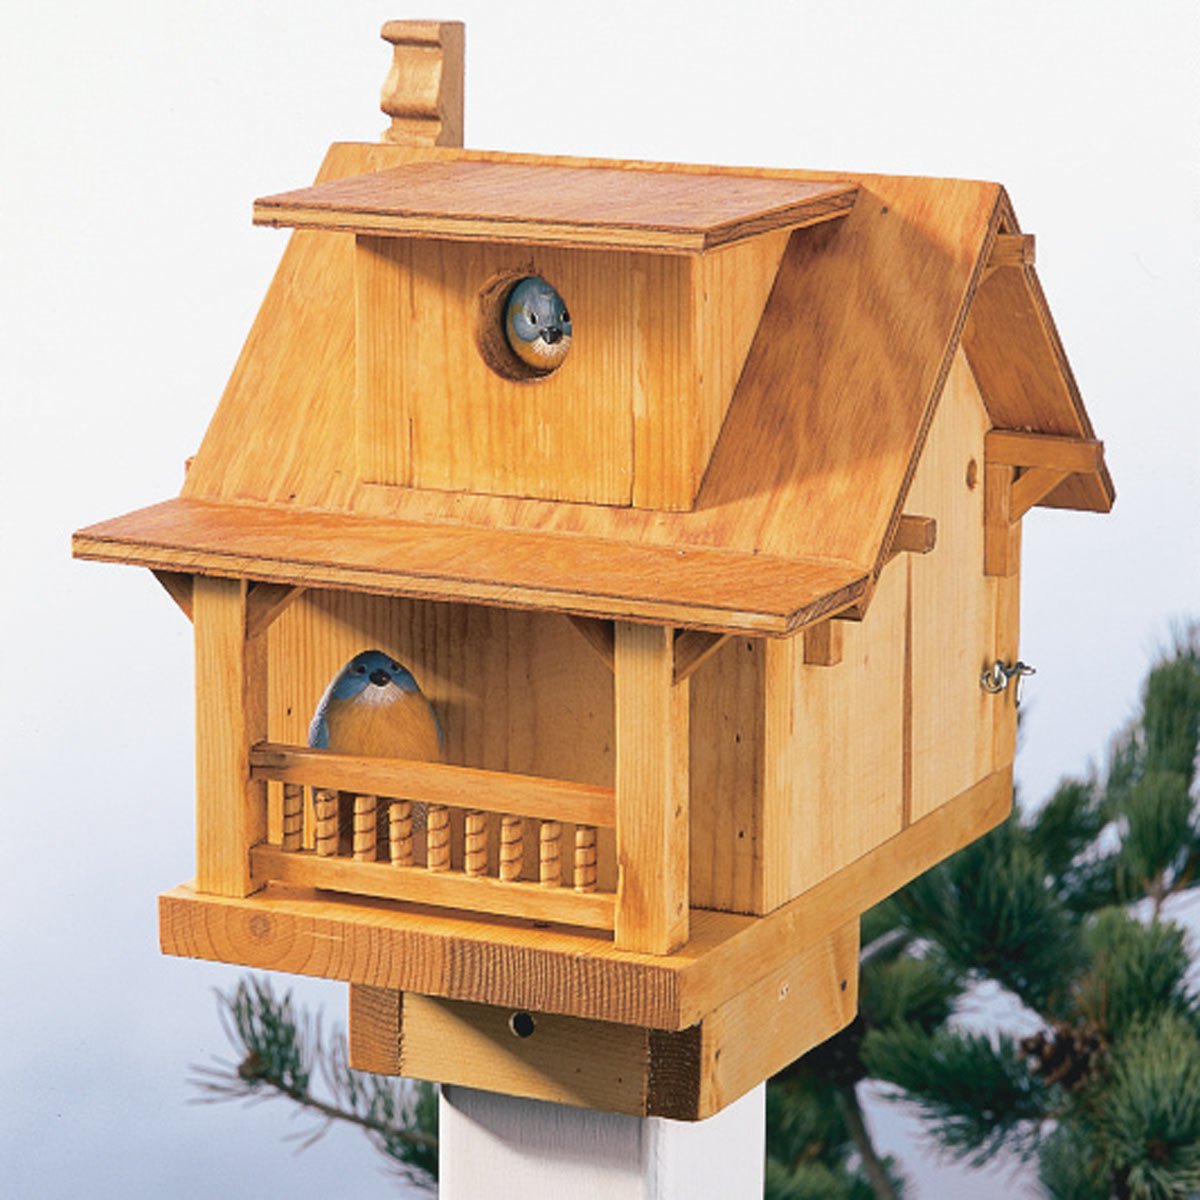 Build a Backyard Birdhouse